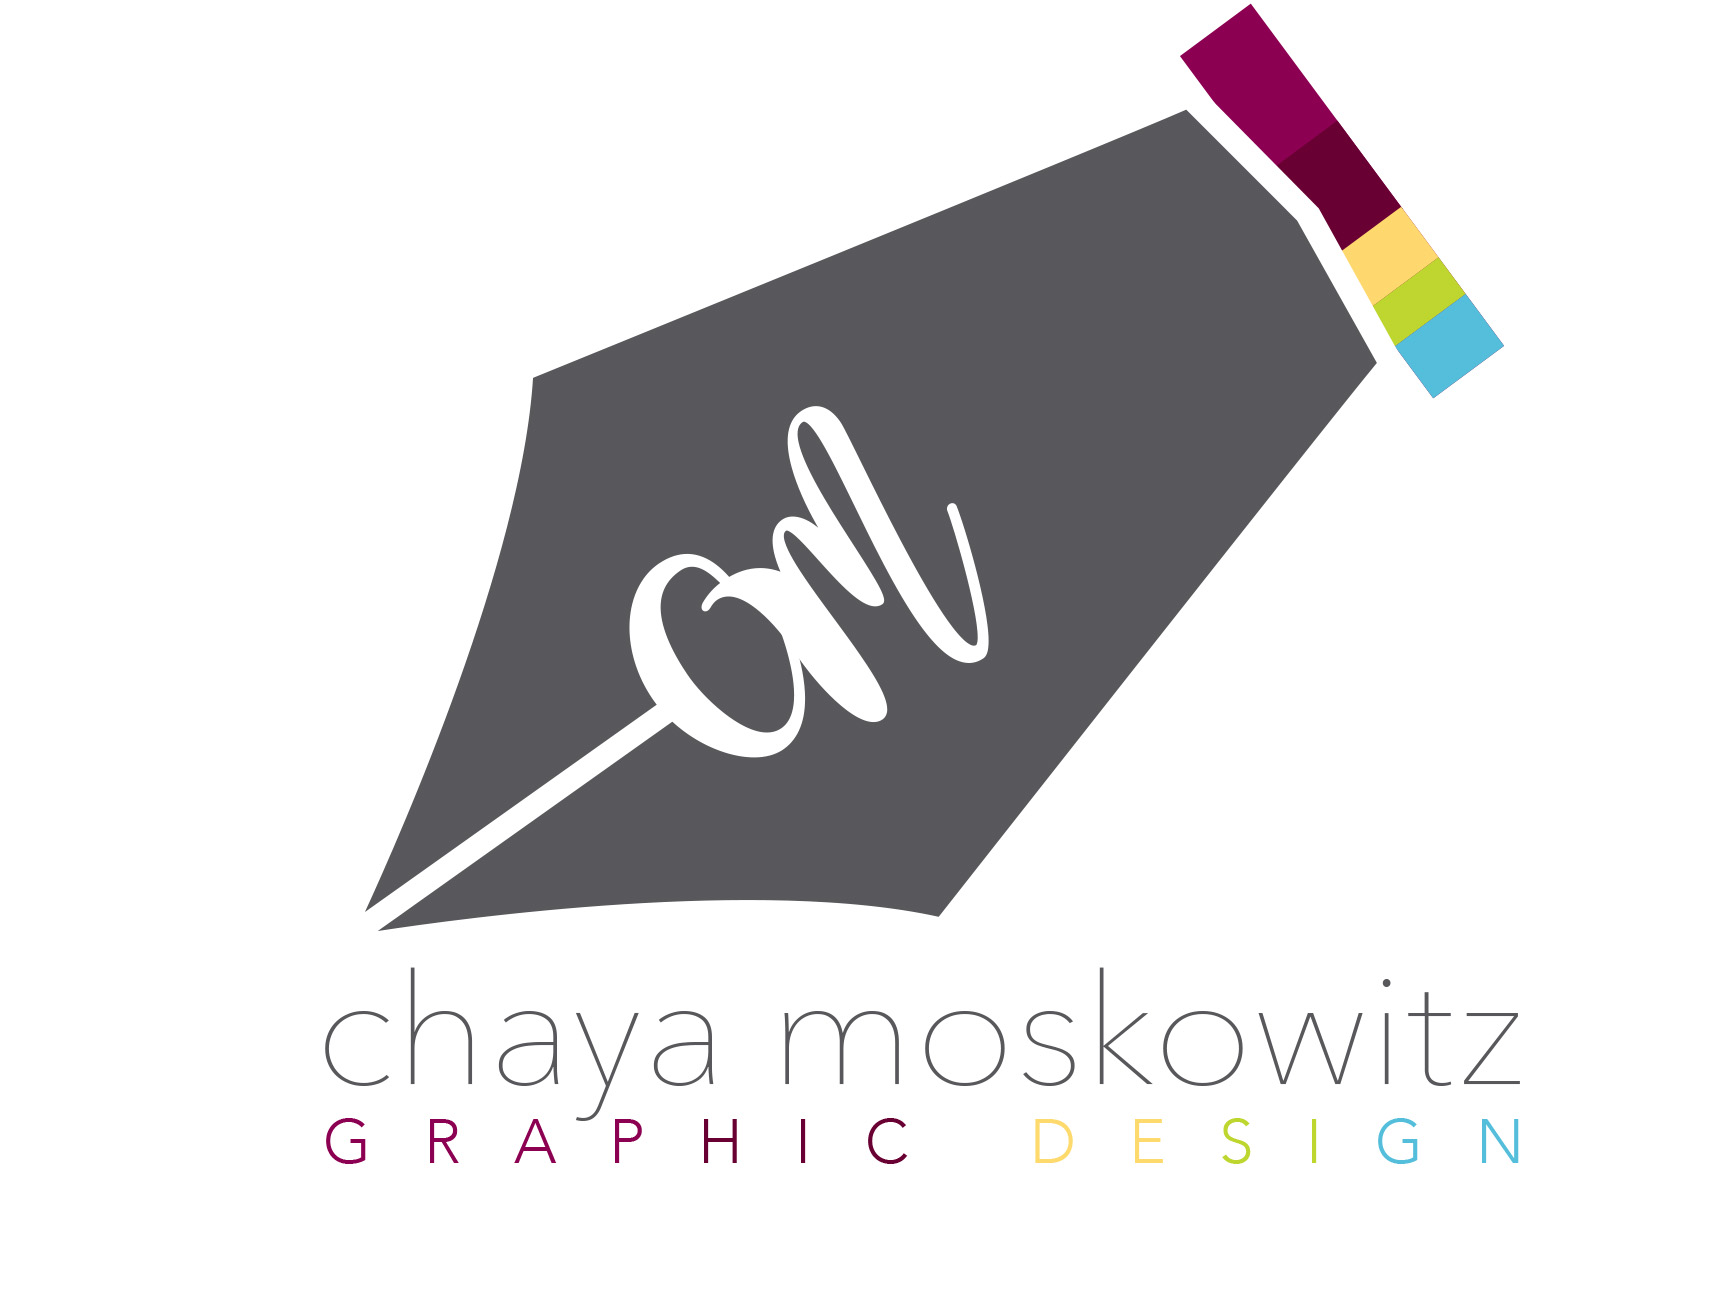 Graphic designer personal Logos